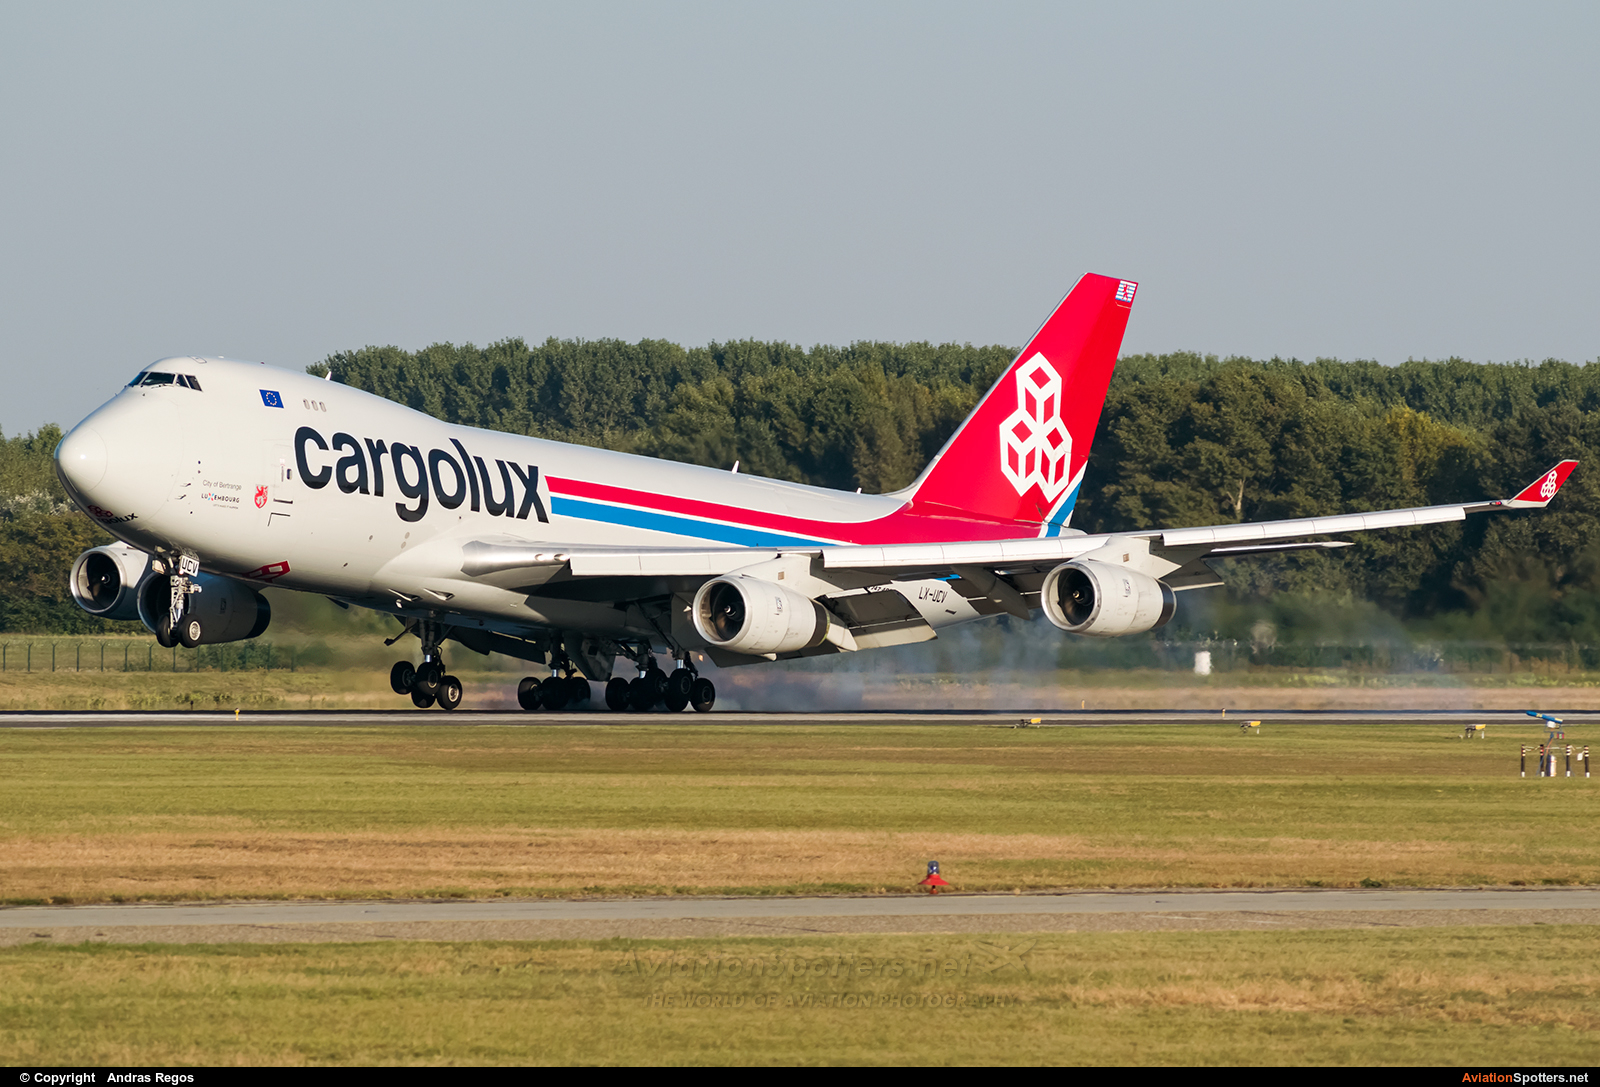 Cargolux  -  747-400F  (LX-UCV) By Andras Regos (regos)